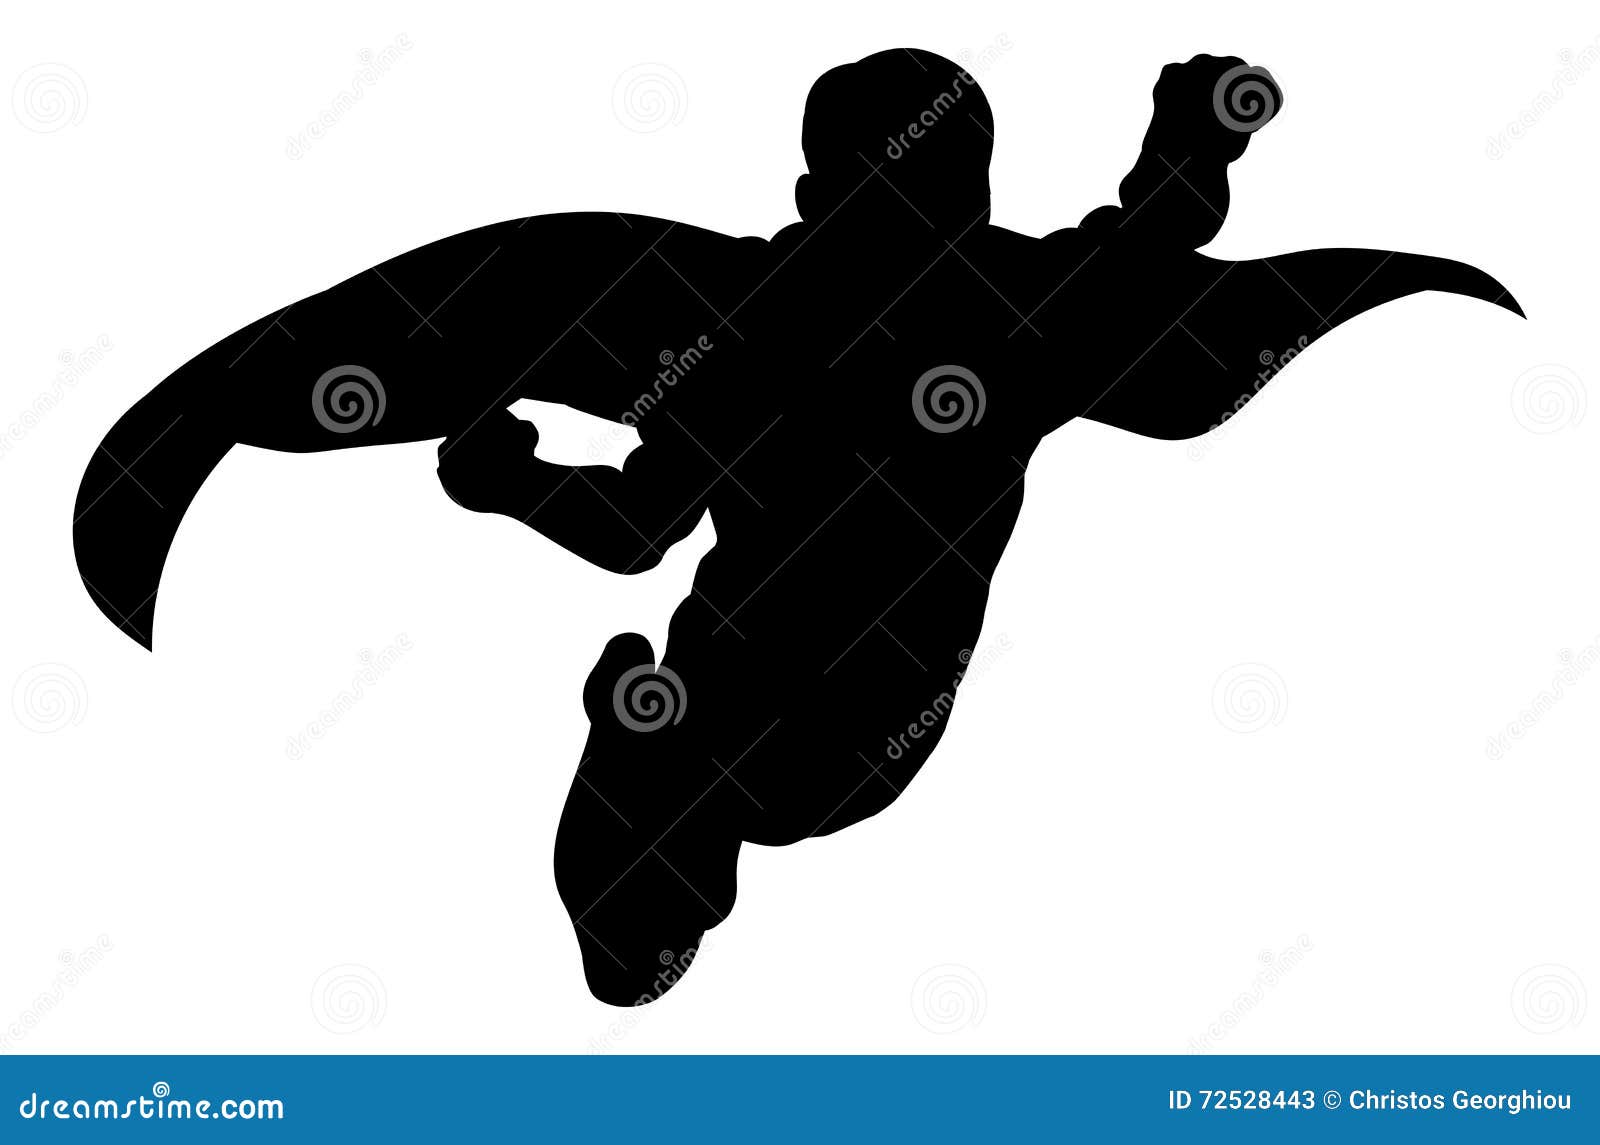 superhero flying silhouette